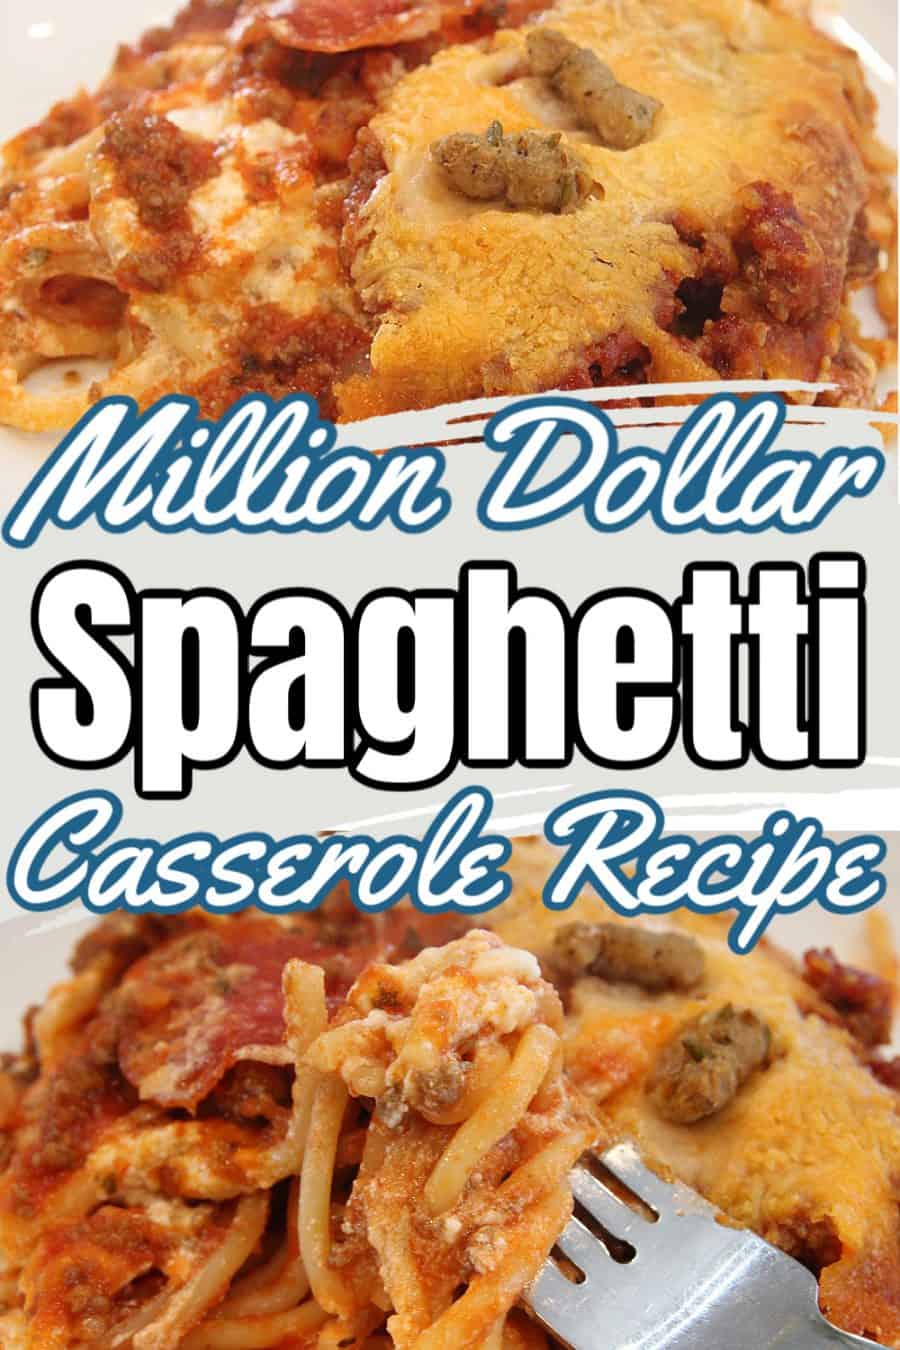 Three Meat Million Dollar Spaghetti Recipe